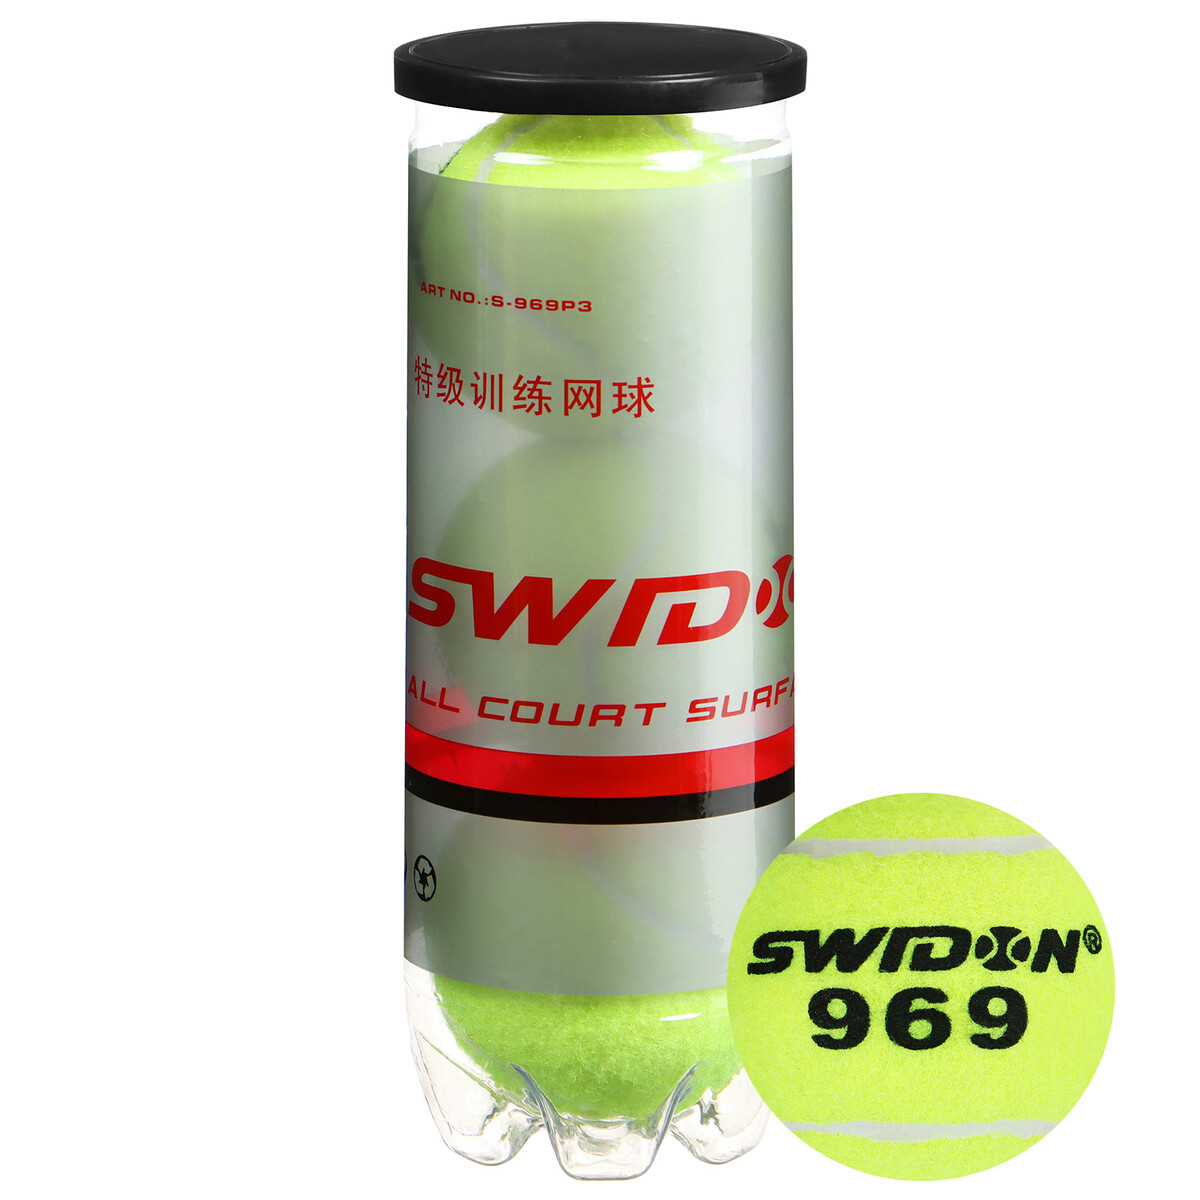 Набор мячей для большого тенниса swidon 969 тренировочный, 3 шт. набор мячей для большого тенниса werkon 989 с давлением 3 шт